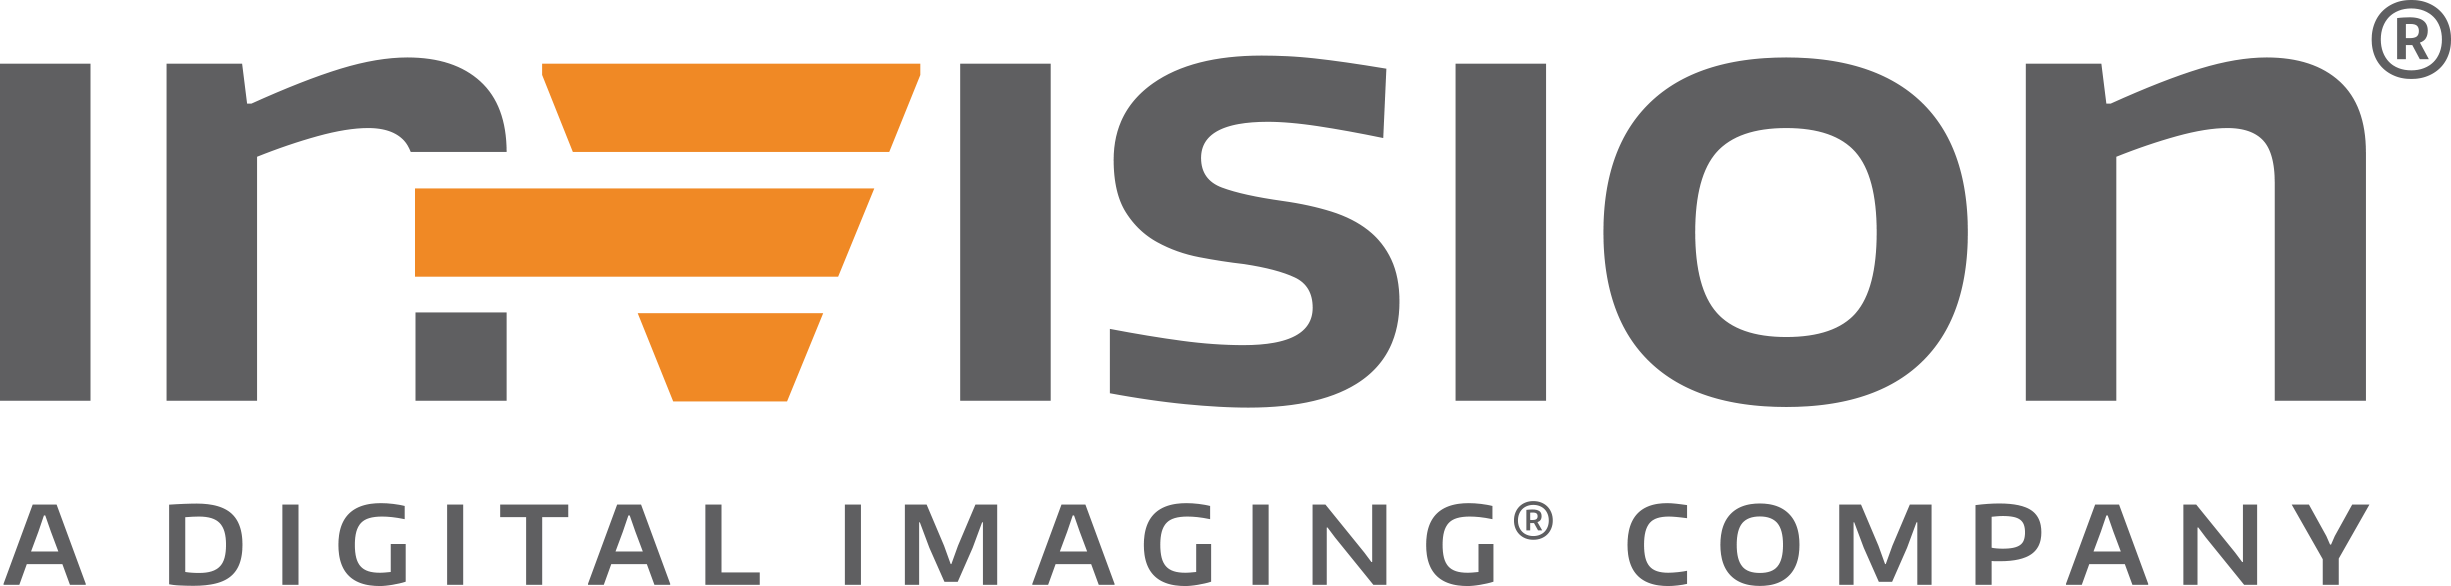 in-vision a digital imaging company (Kopie)